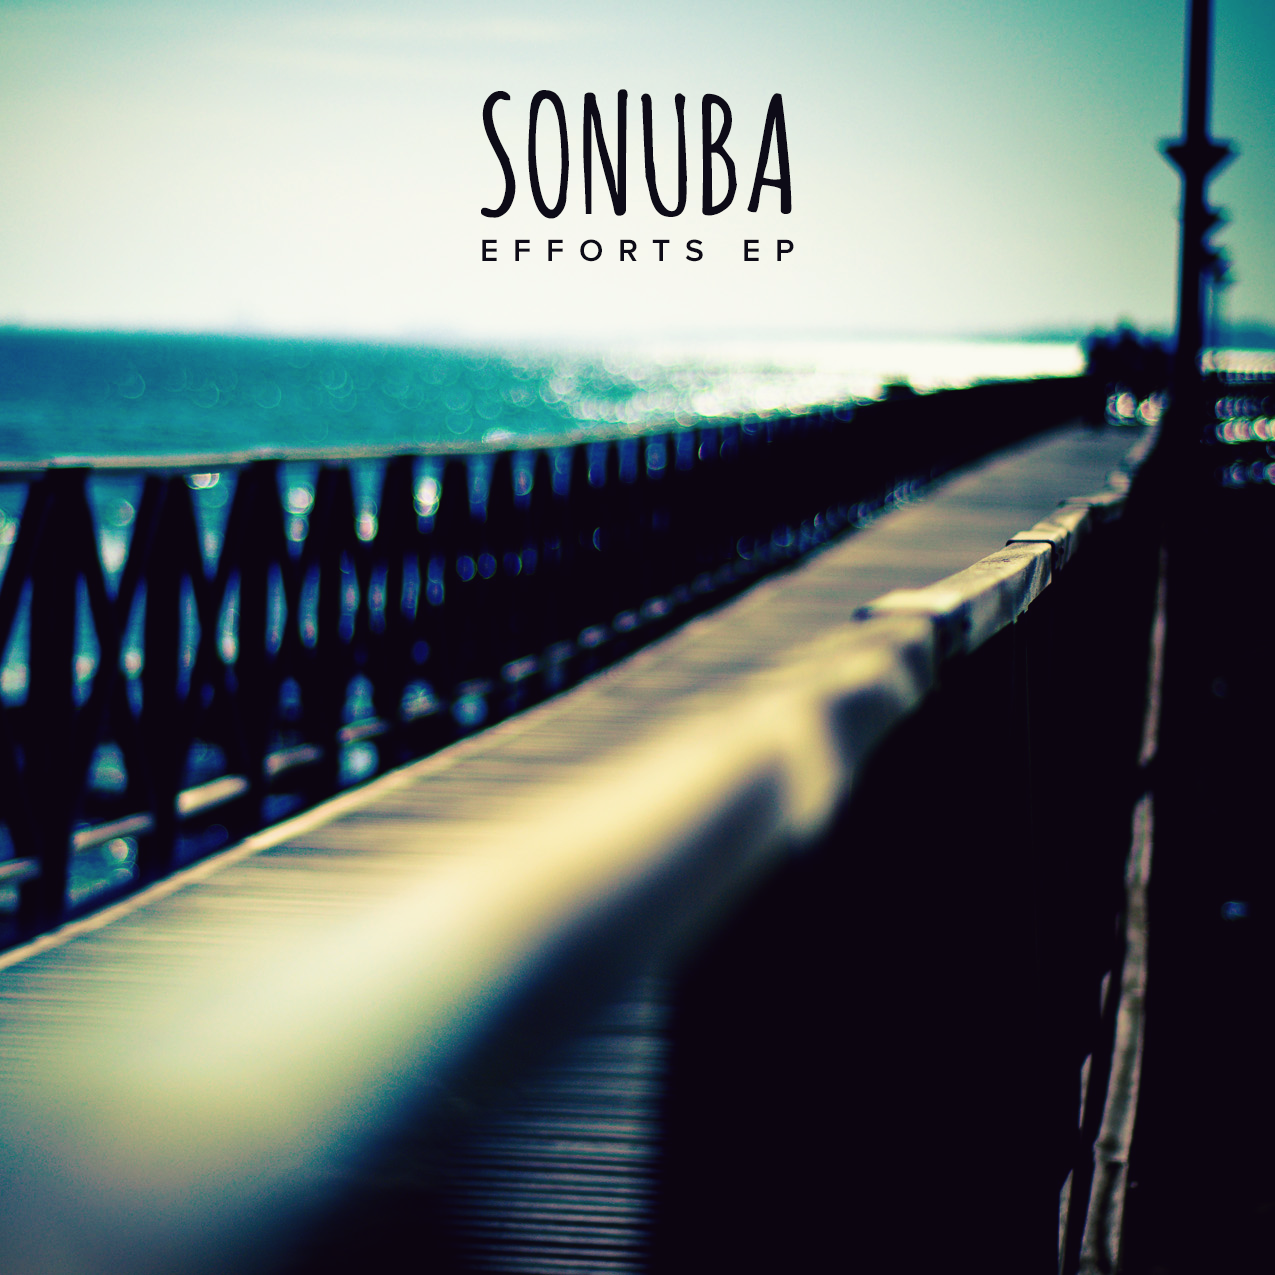 Superbe EP – EFFORTS de SONUBA